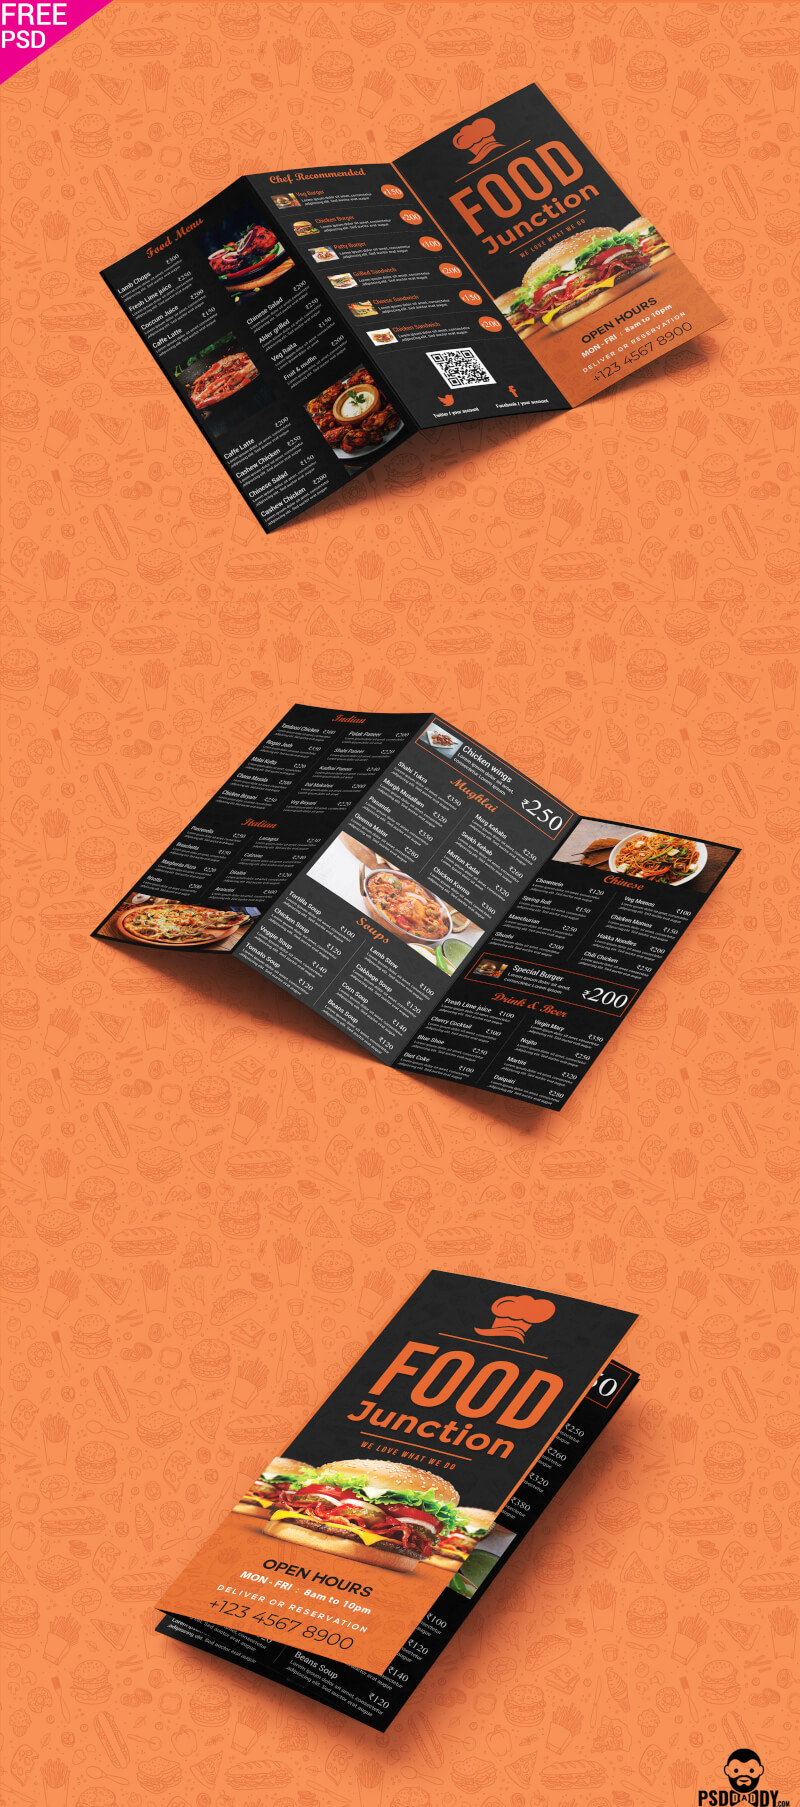 Restaurant brochure templates,Restaurant brochure psd,Food Menu psd,Food menu tempalate,Trifold brochure menu,Restaurant tent card psd,Restaurant card mmenu,Restuarant menu card,